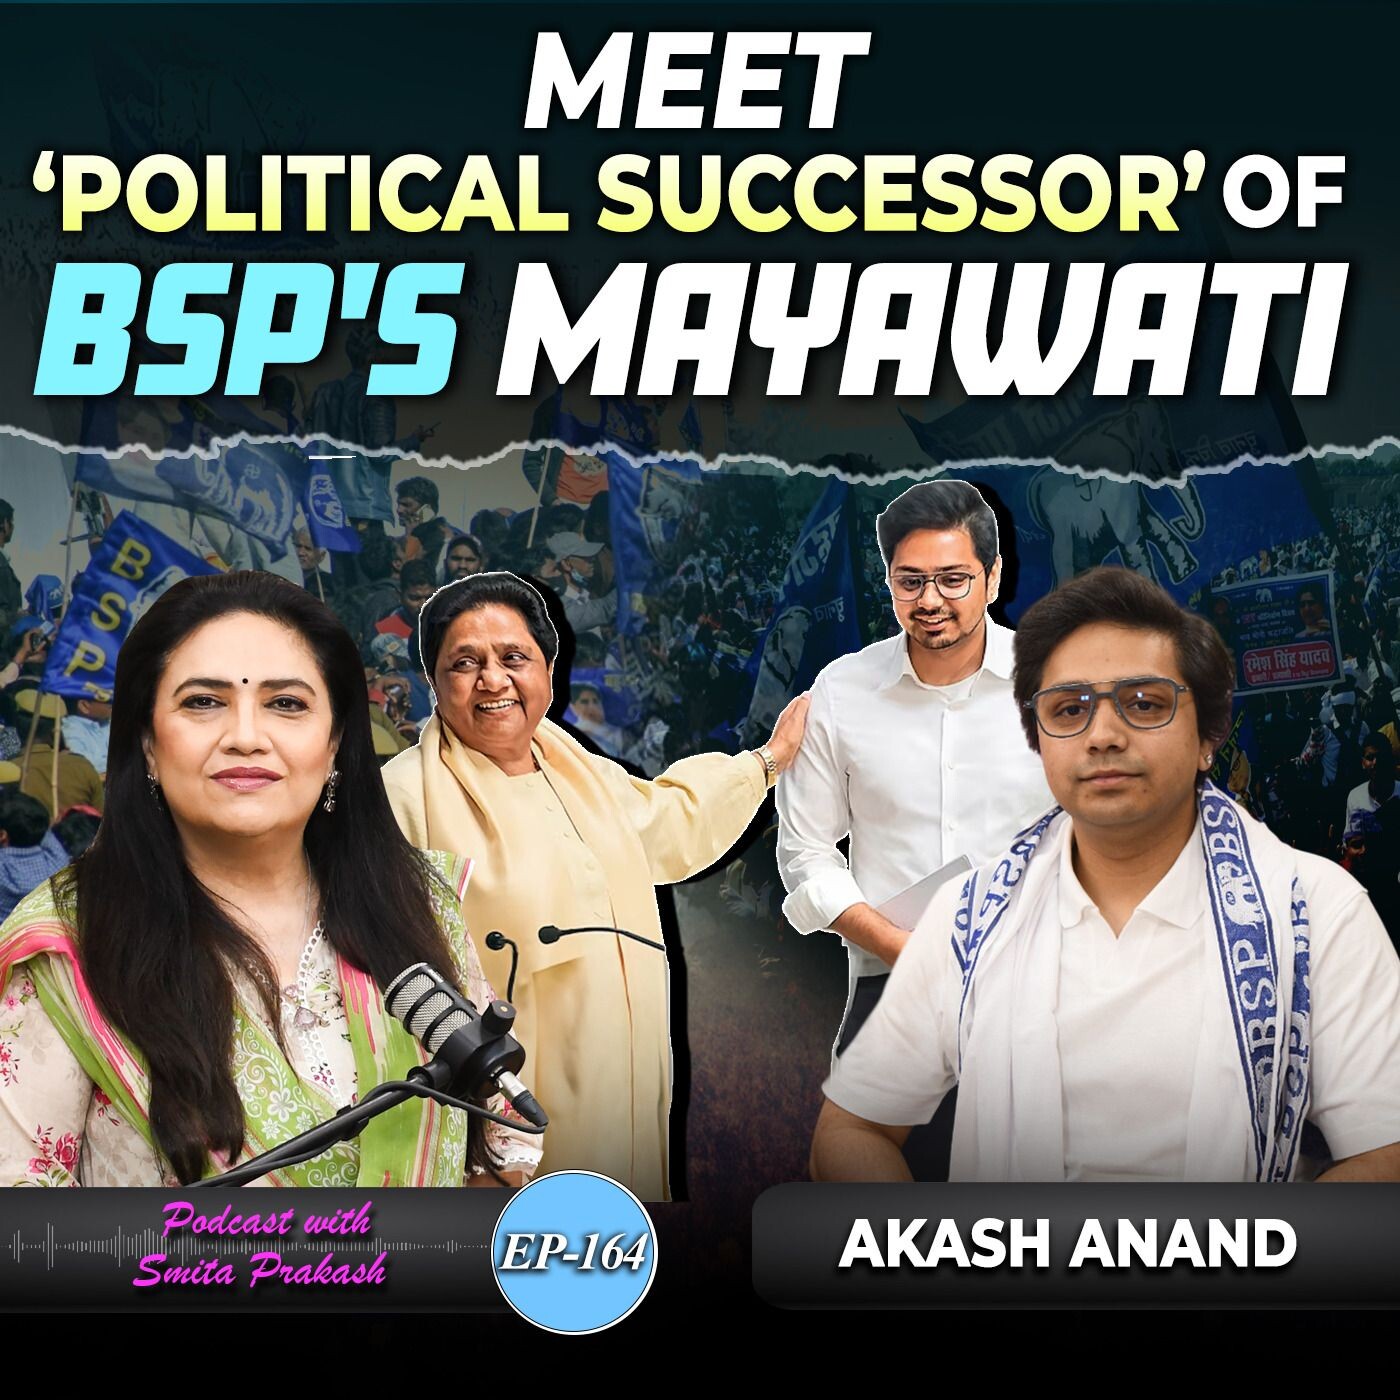 EP 164 - U.P. Politics, Dalit Identity, BSP-SP Break-Up with 'Behenji's' Successor Akash Anand